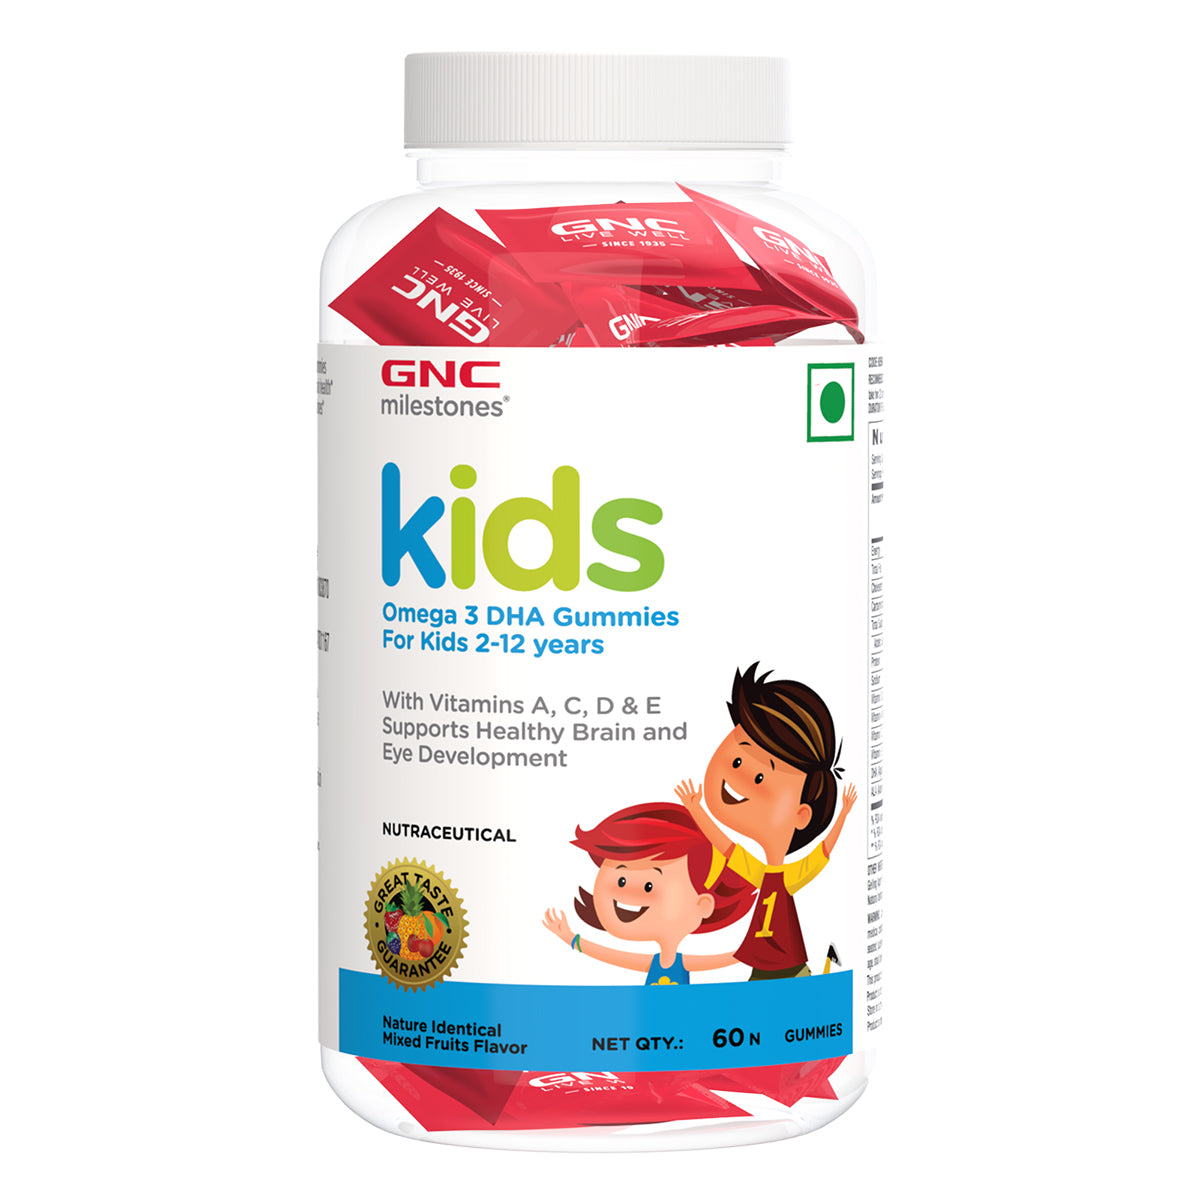 GNC milestones kids Omega 3 DHA Gummies - For Healthy Brain & Eye Development In 2-12Y Kids